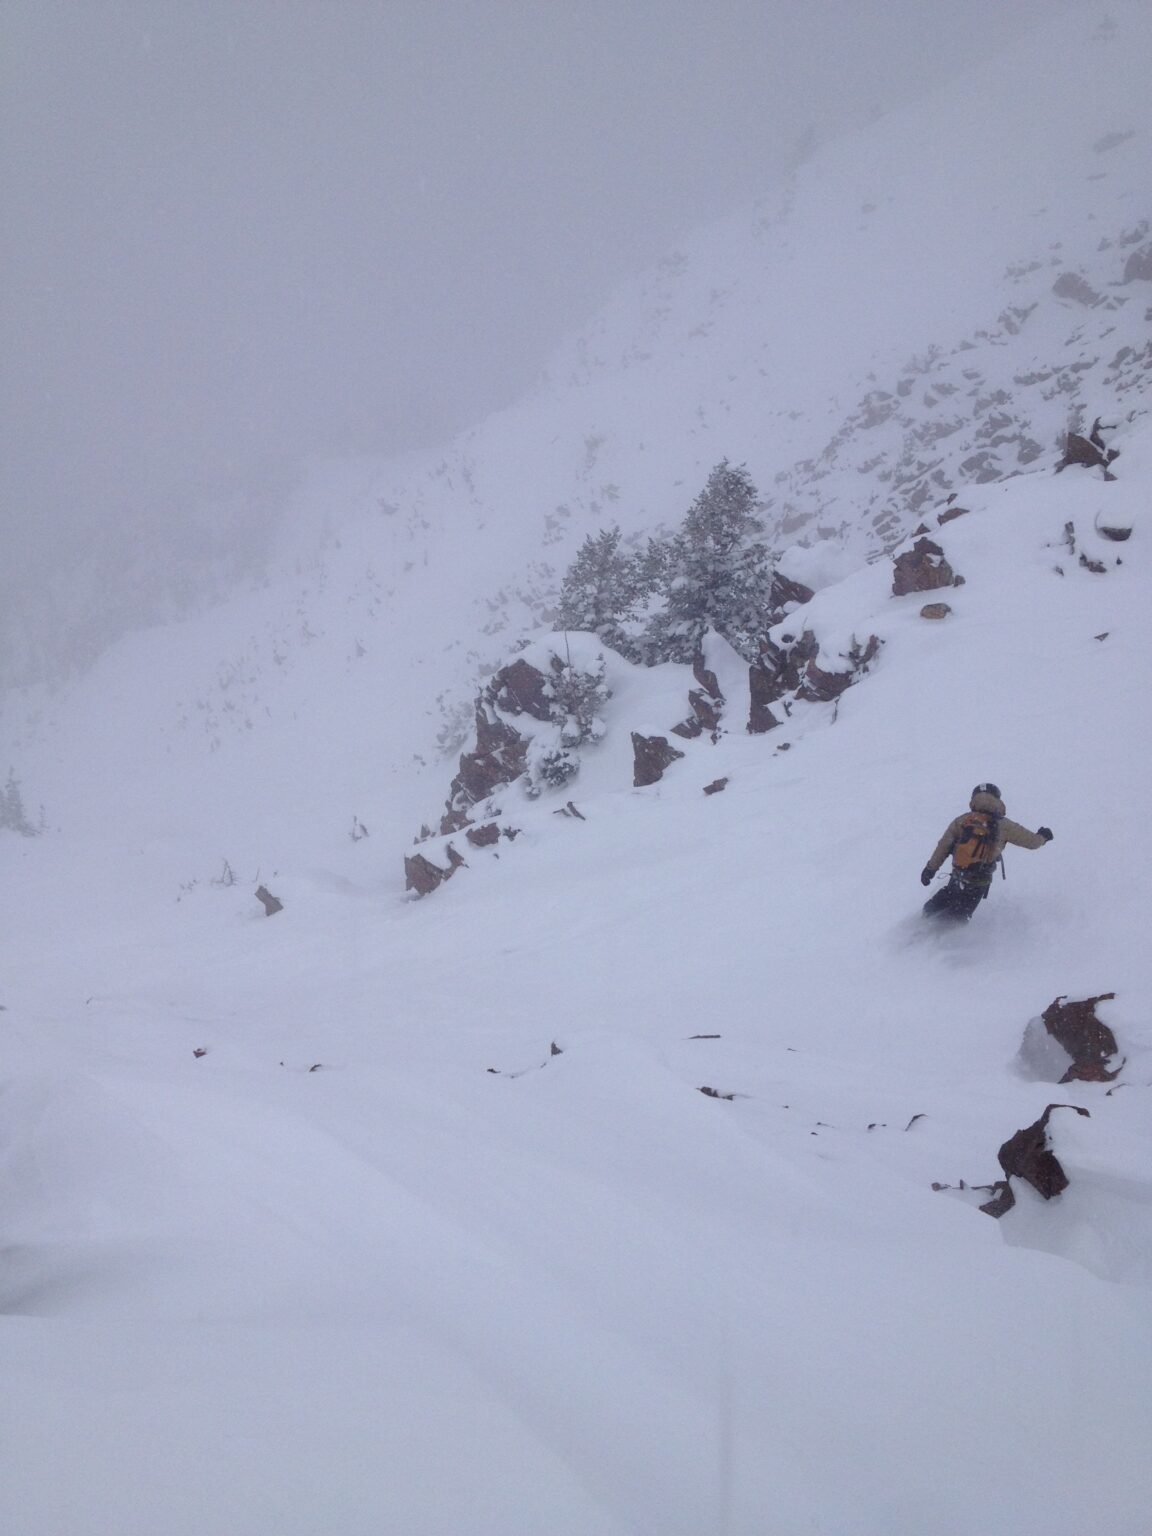 Snowboarding down the White Pine Chute